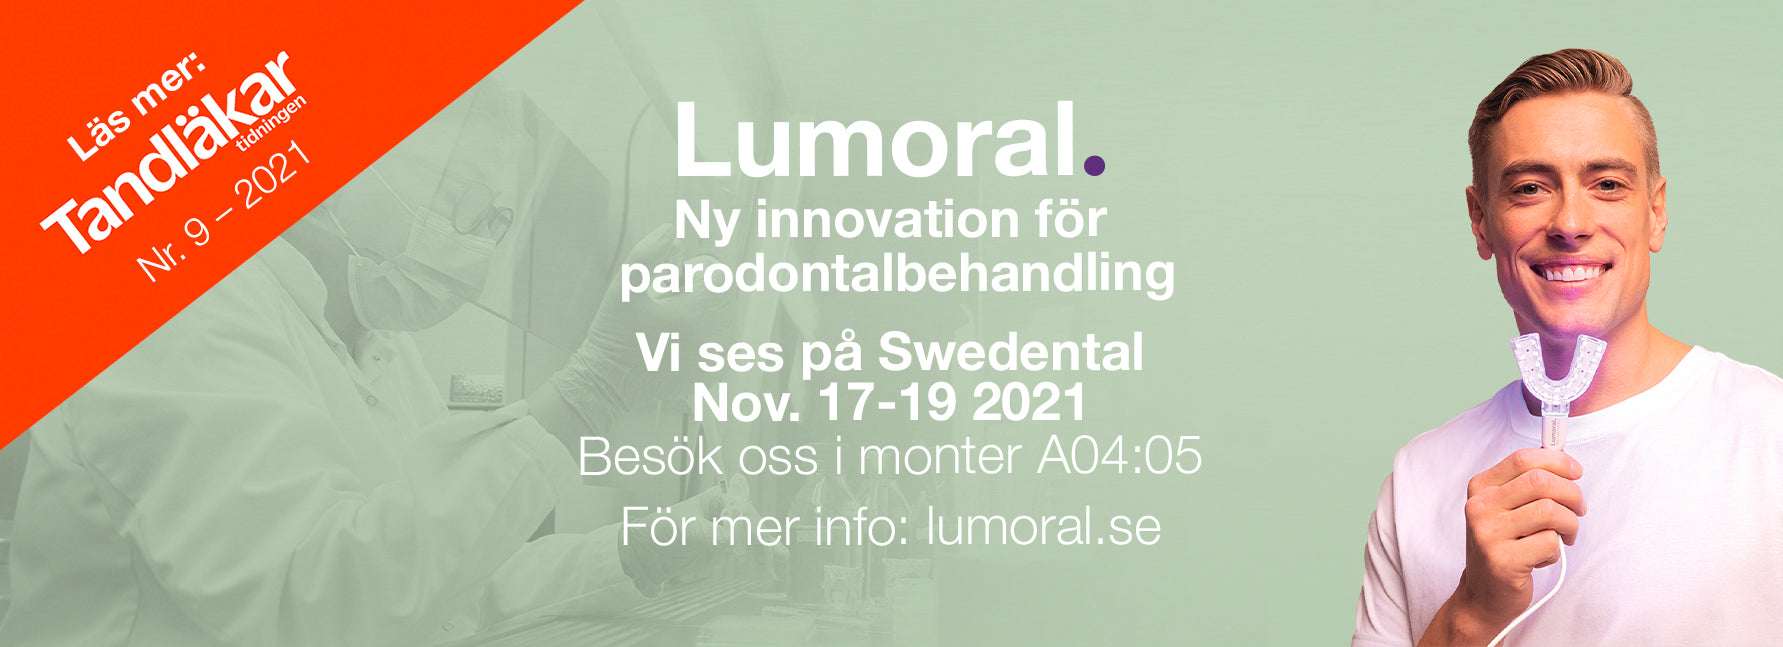 Invitation to Swedental 2021